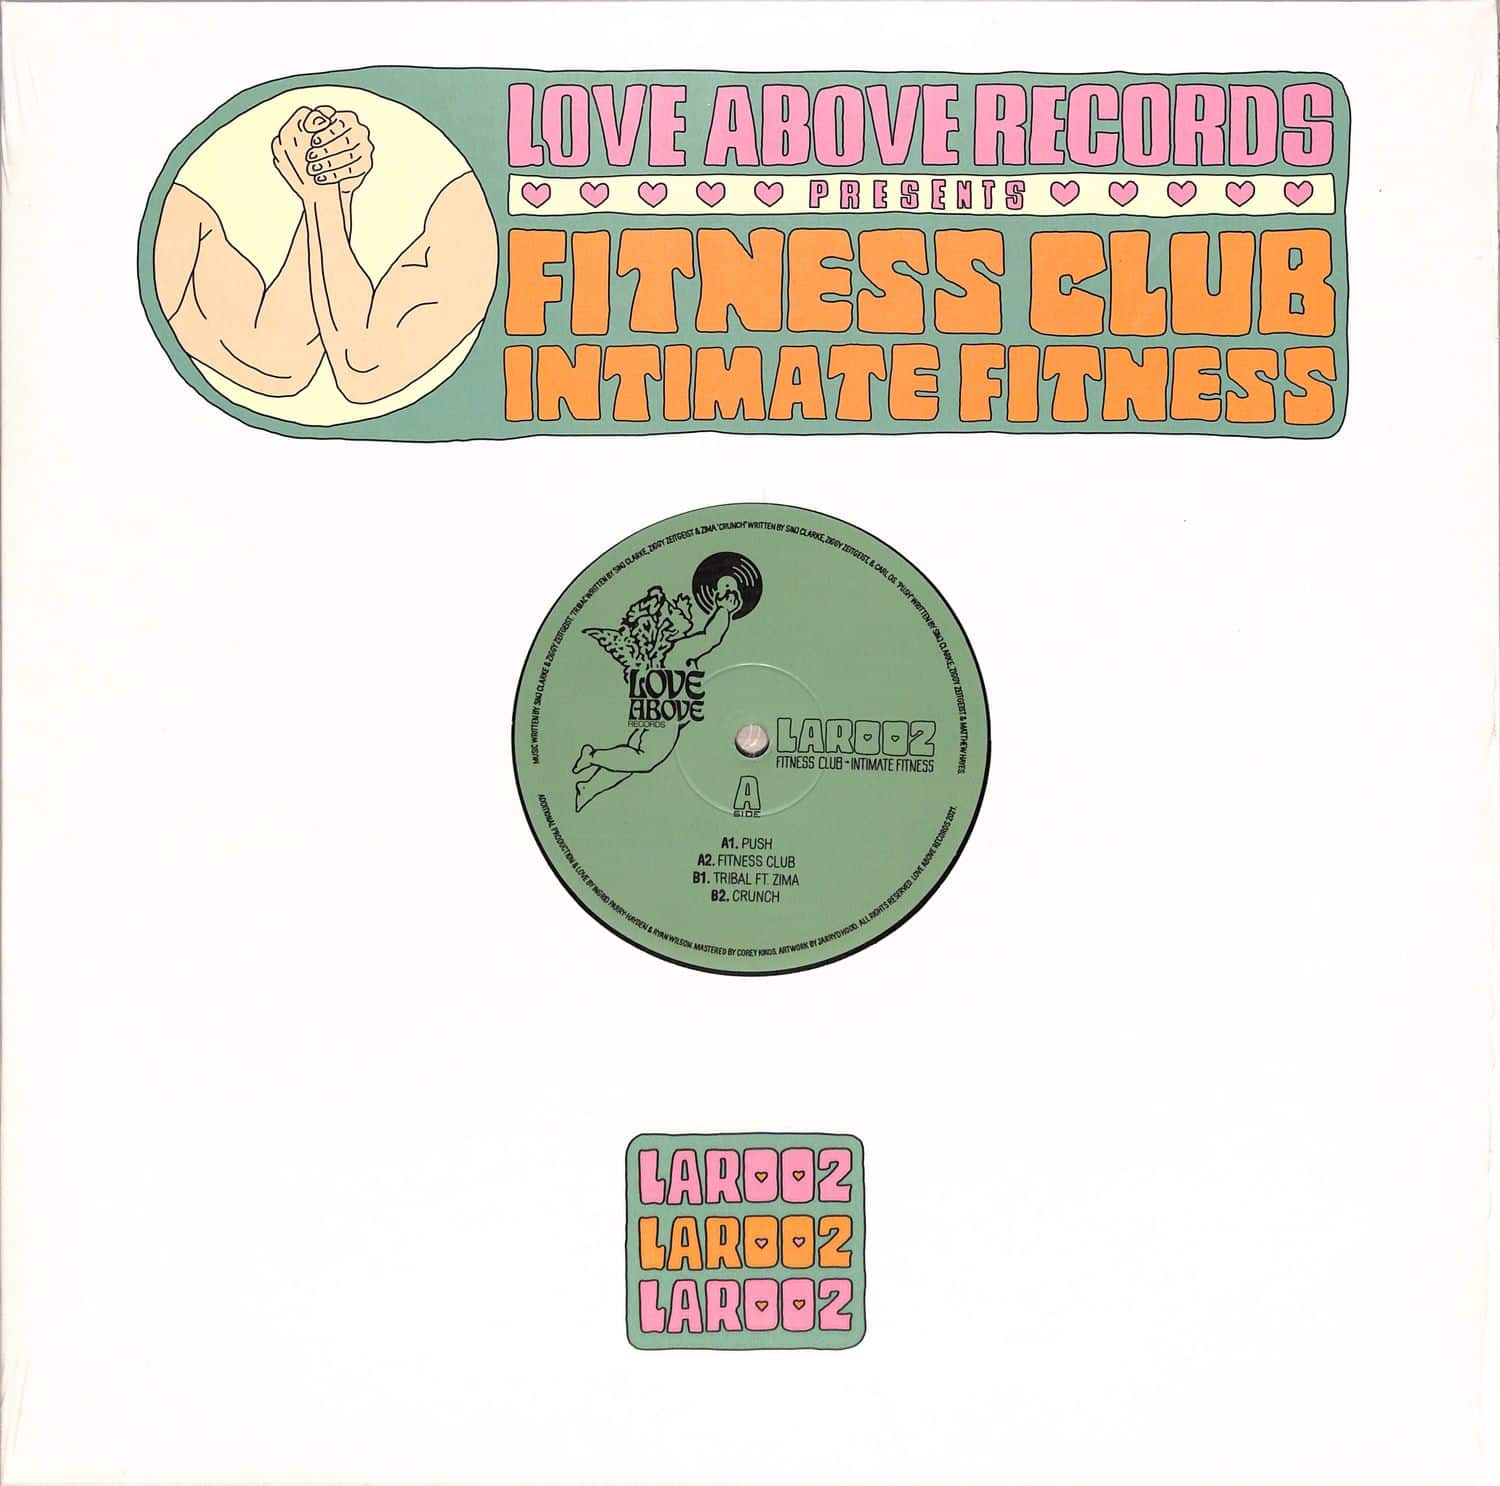 Fitness Club - INTIMATE FITNESS